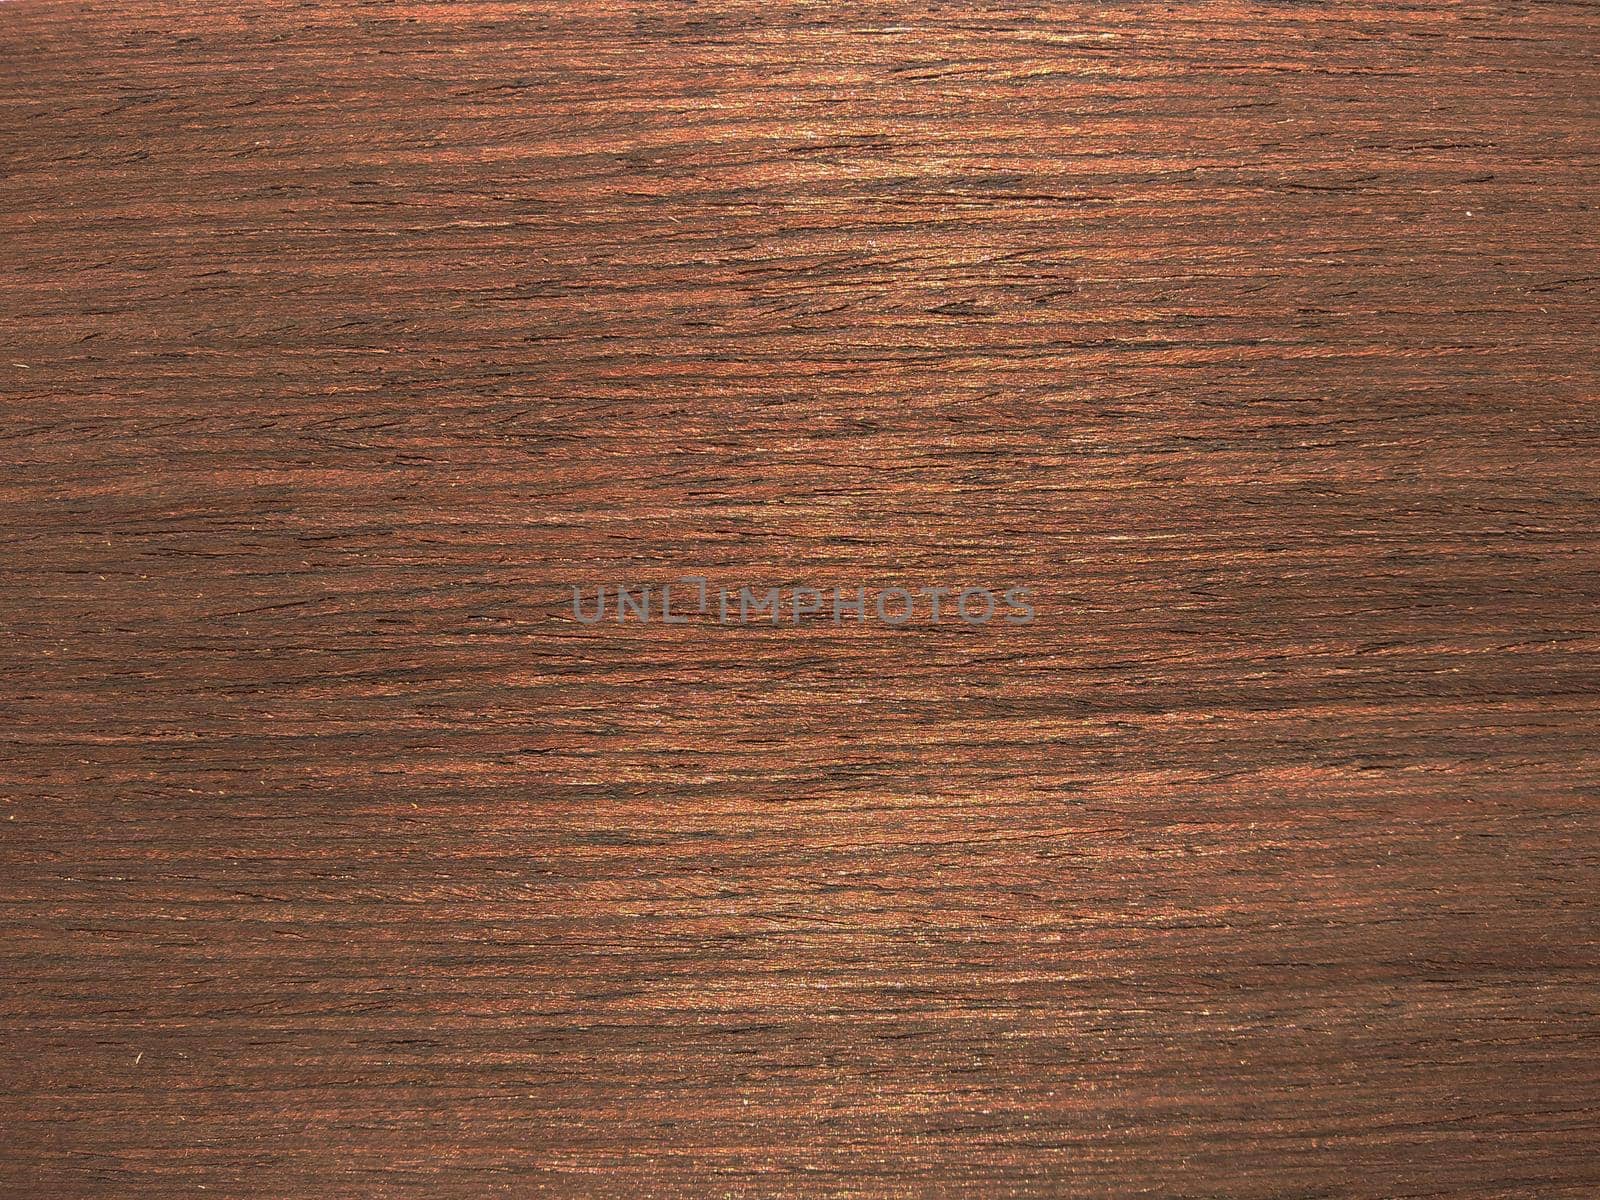 Natural Dark wenge wood veneer close up image. natural textured slices of wood.